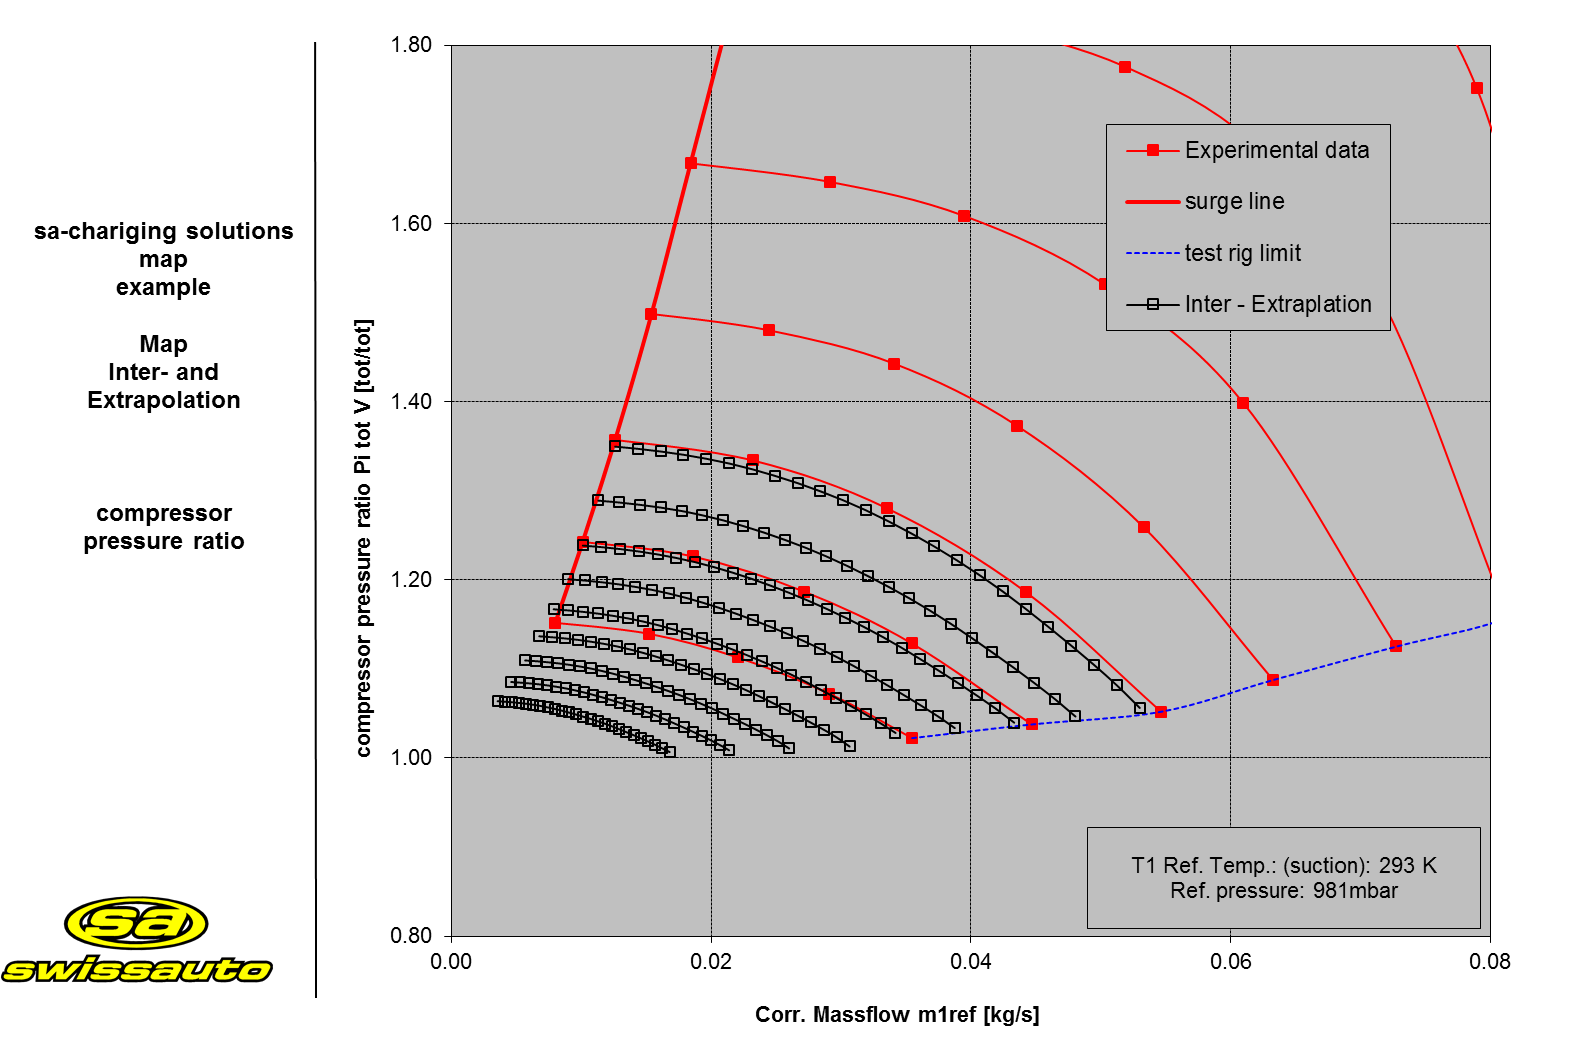 Inter- and extrapolation of the compressor pressure ratio